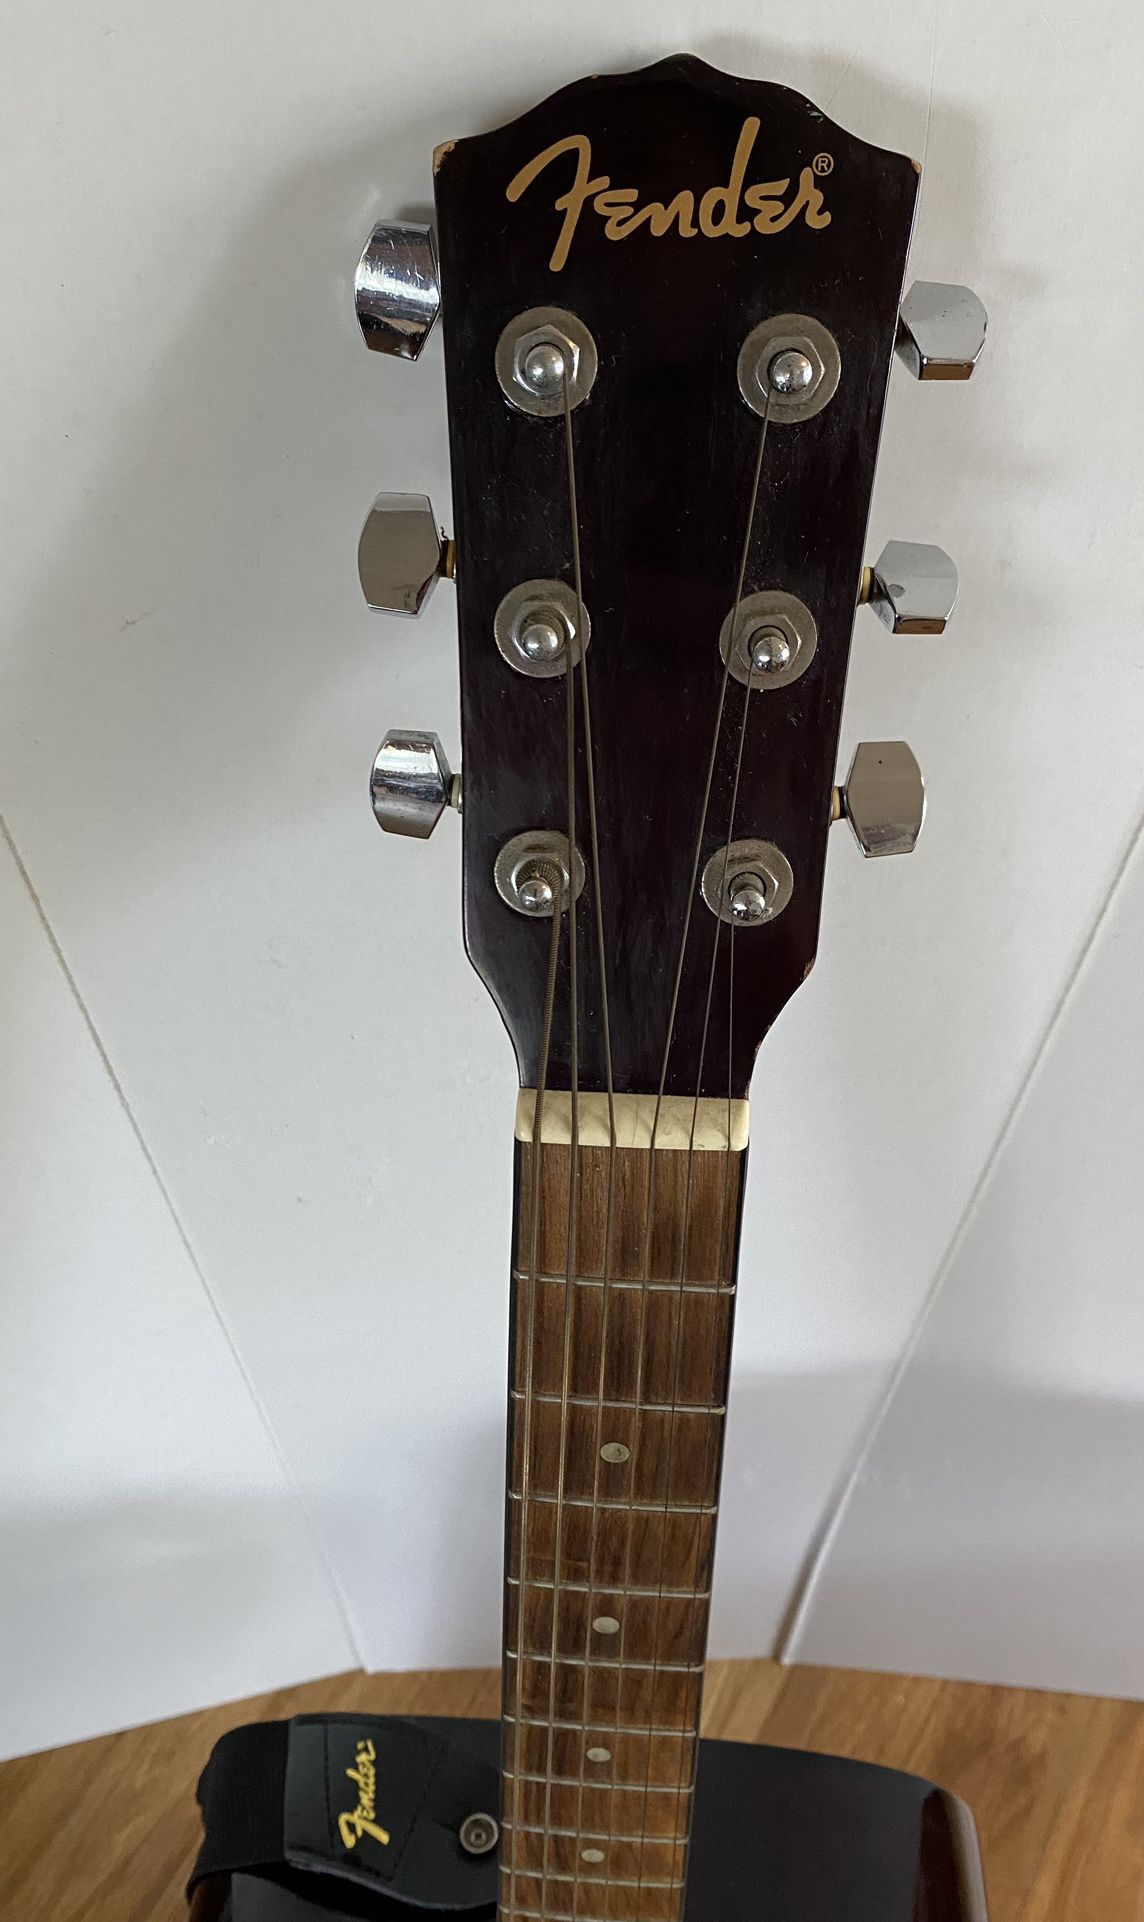 Fender Acoustic Guitar with Fender Strap